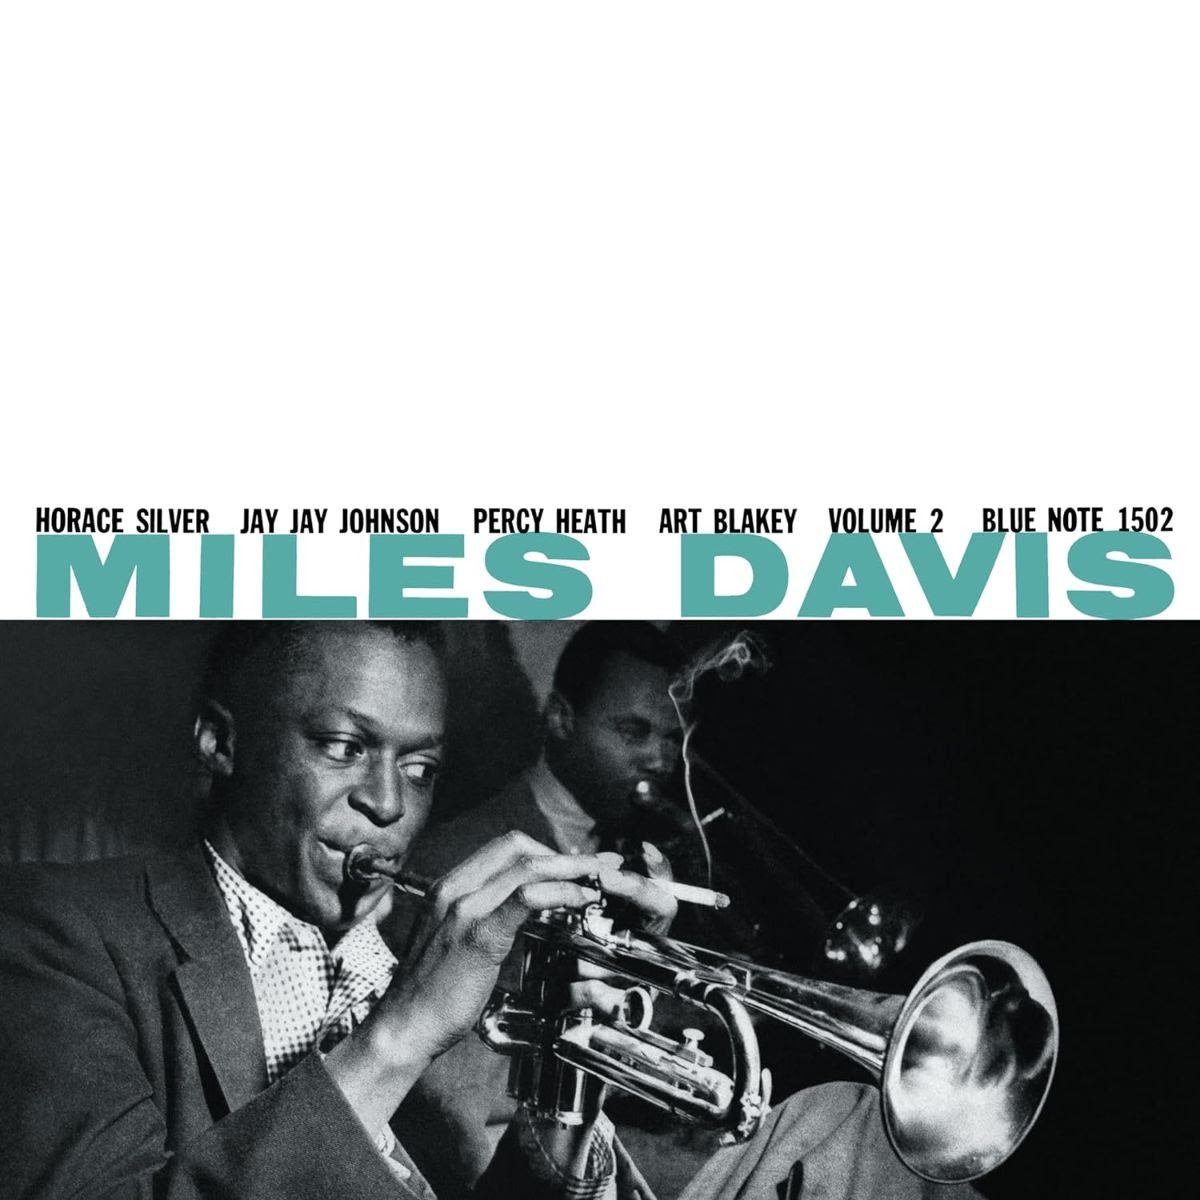 Miles Davis - Volume 2 | Buy the Vinyl LP from Flying Nun Records